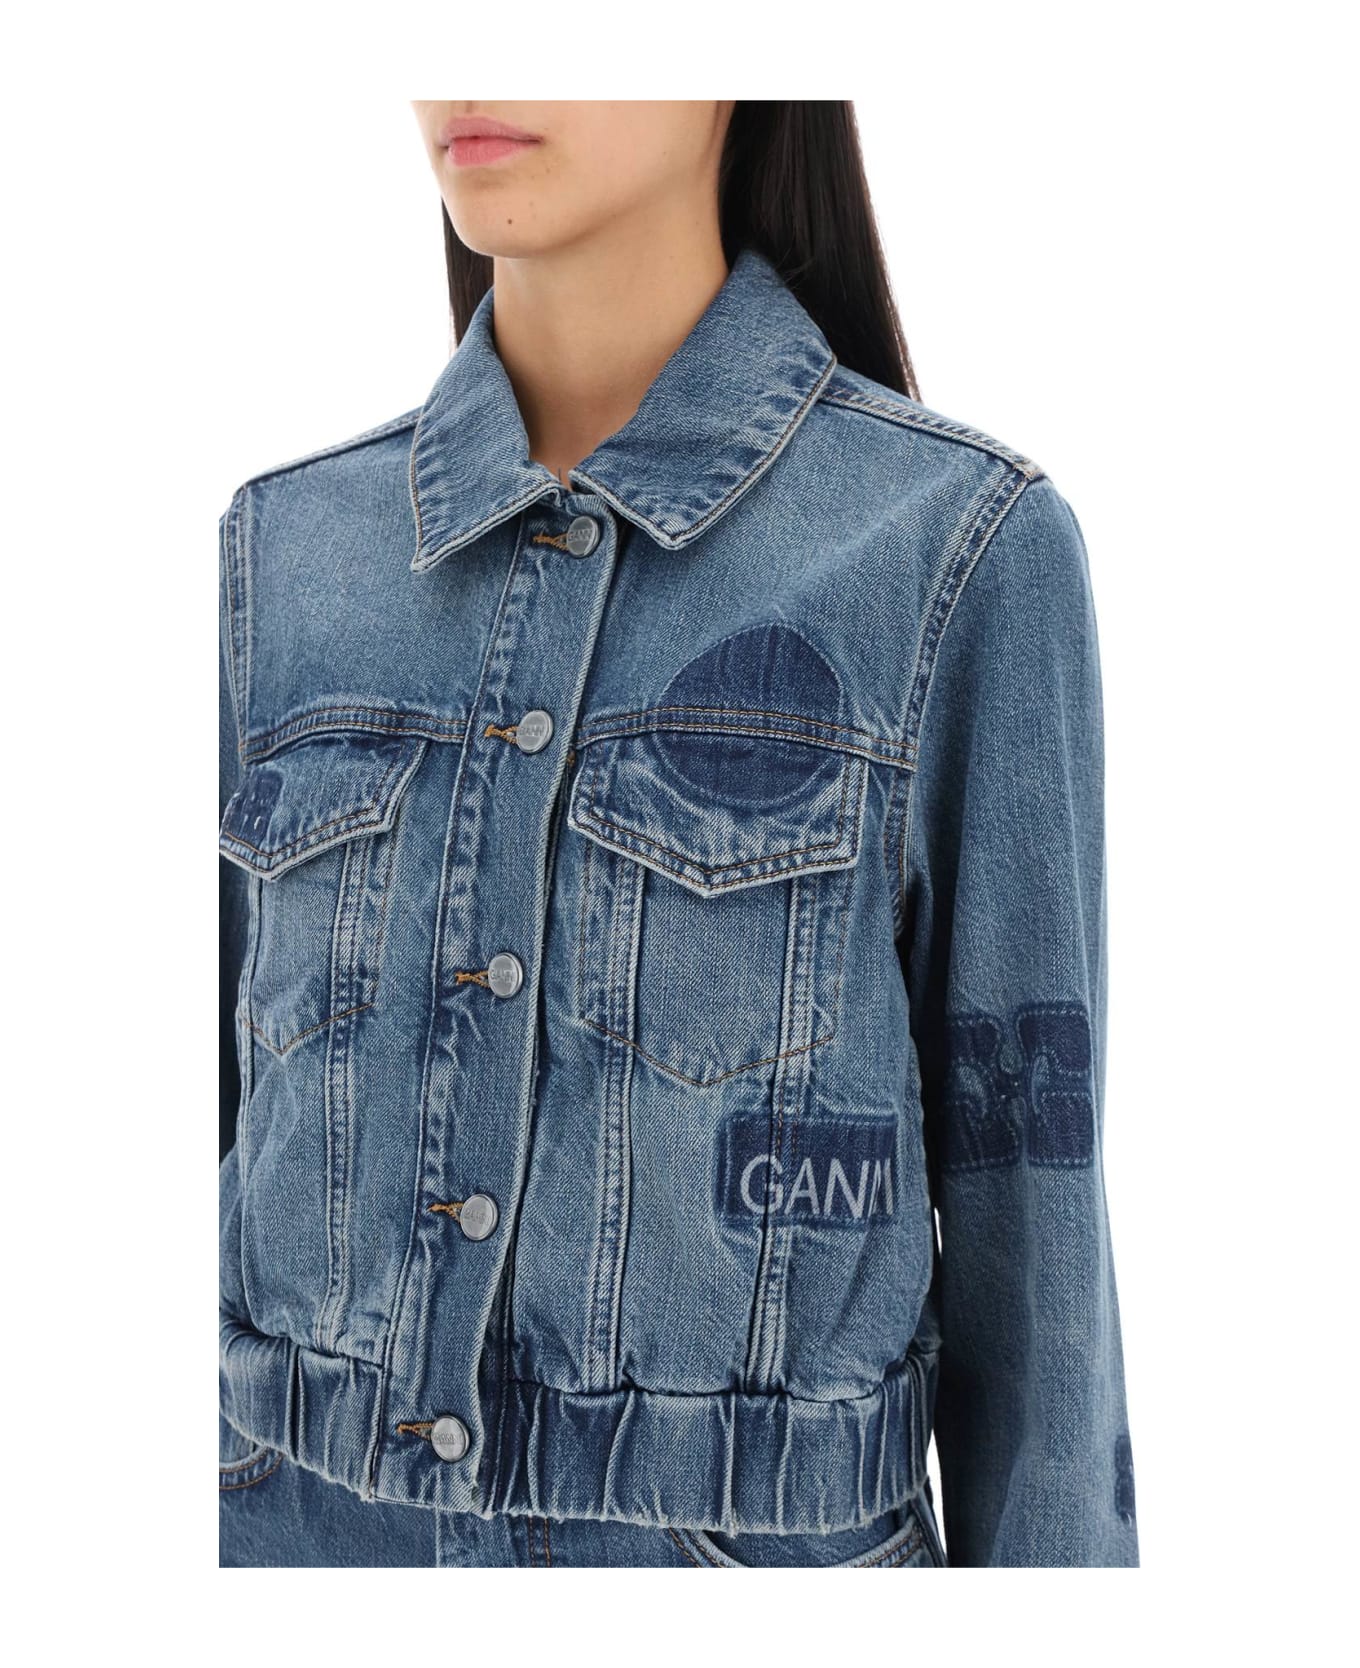 Ganni Blue Organic Cotton Bomber Jacket - TINT WASH (Light blue)